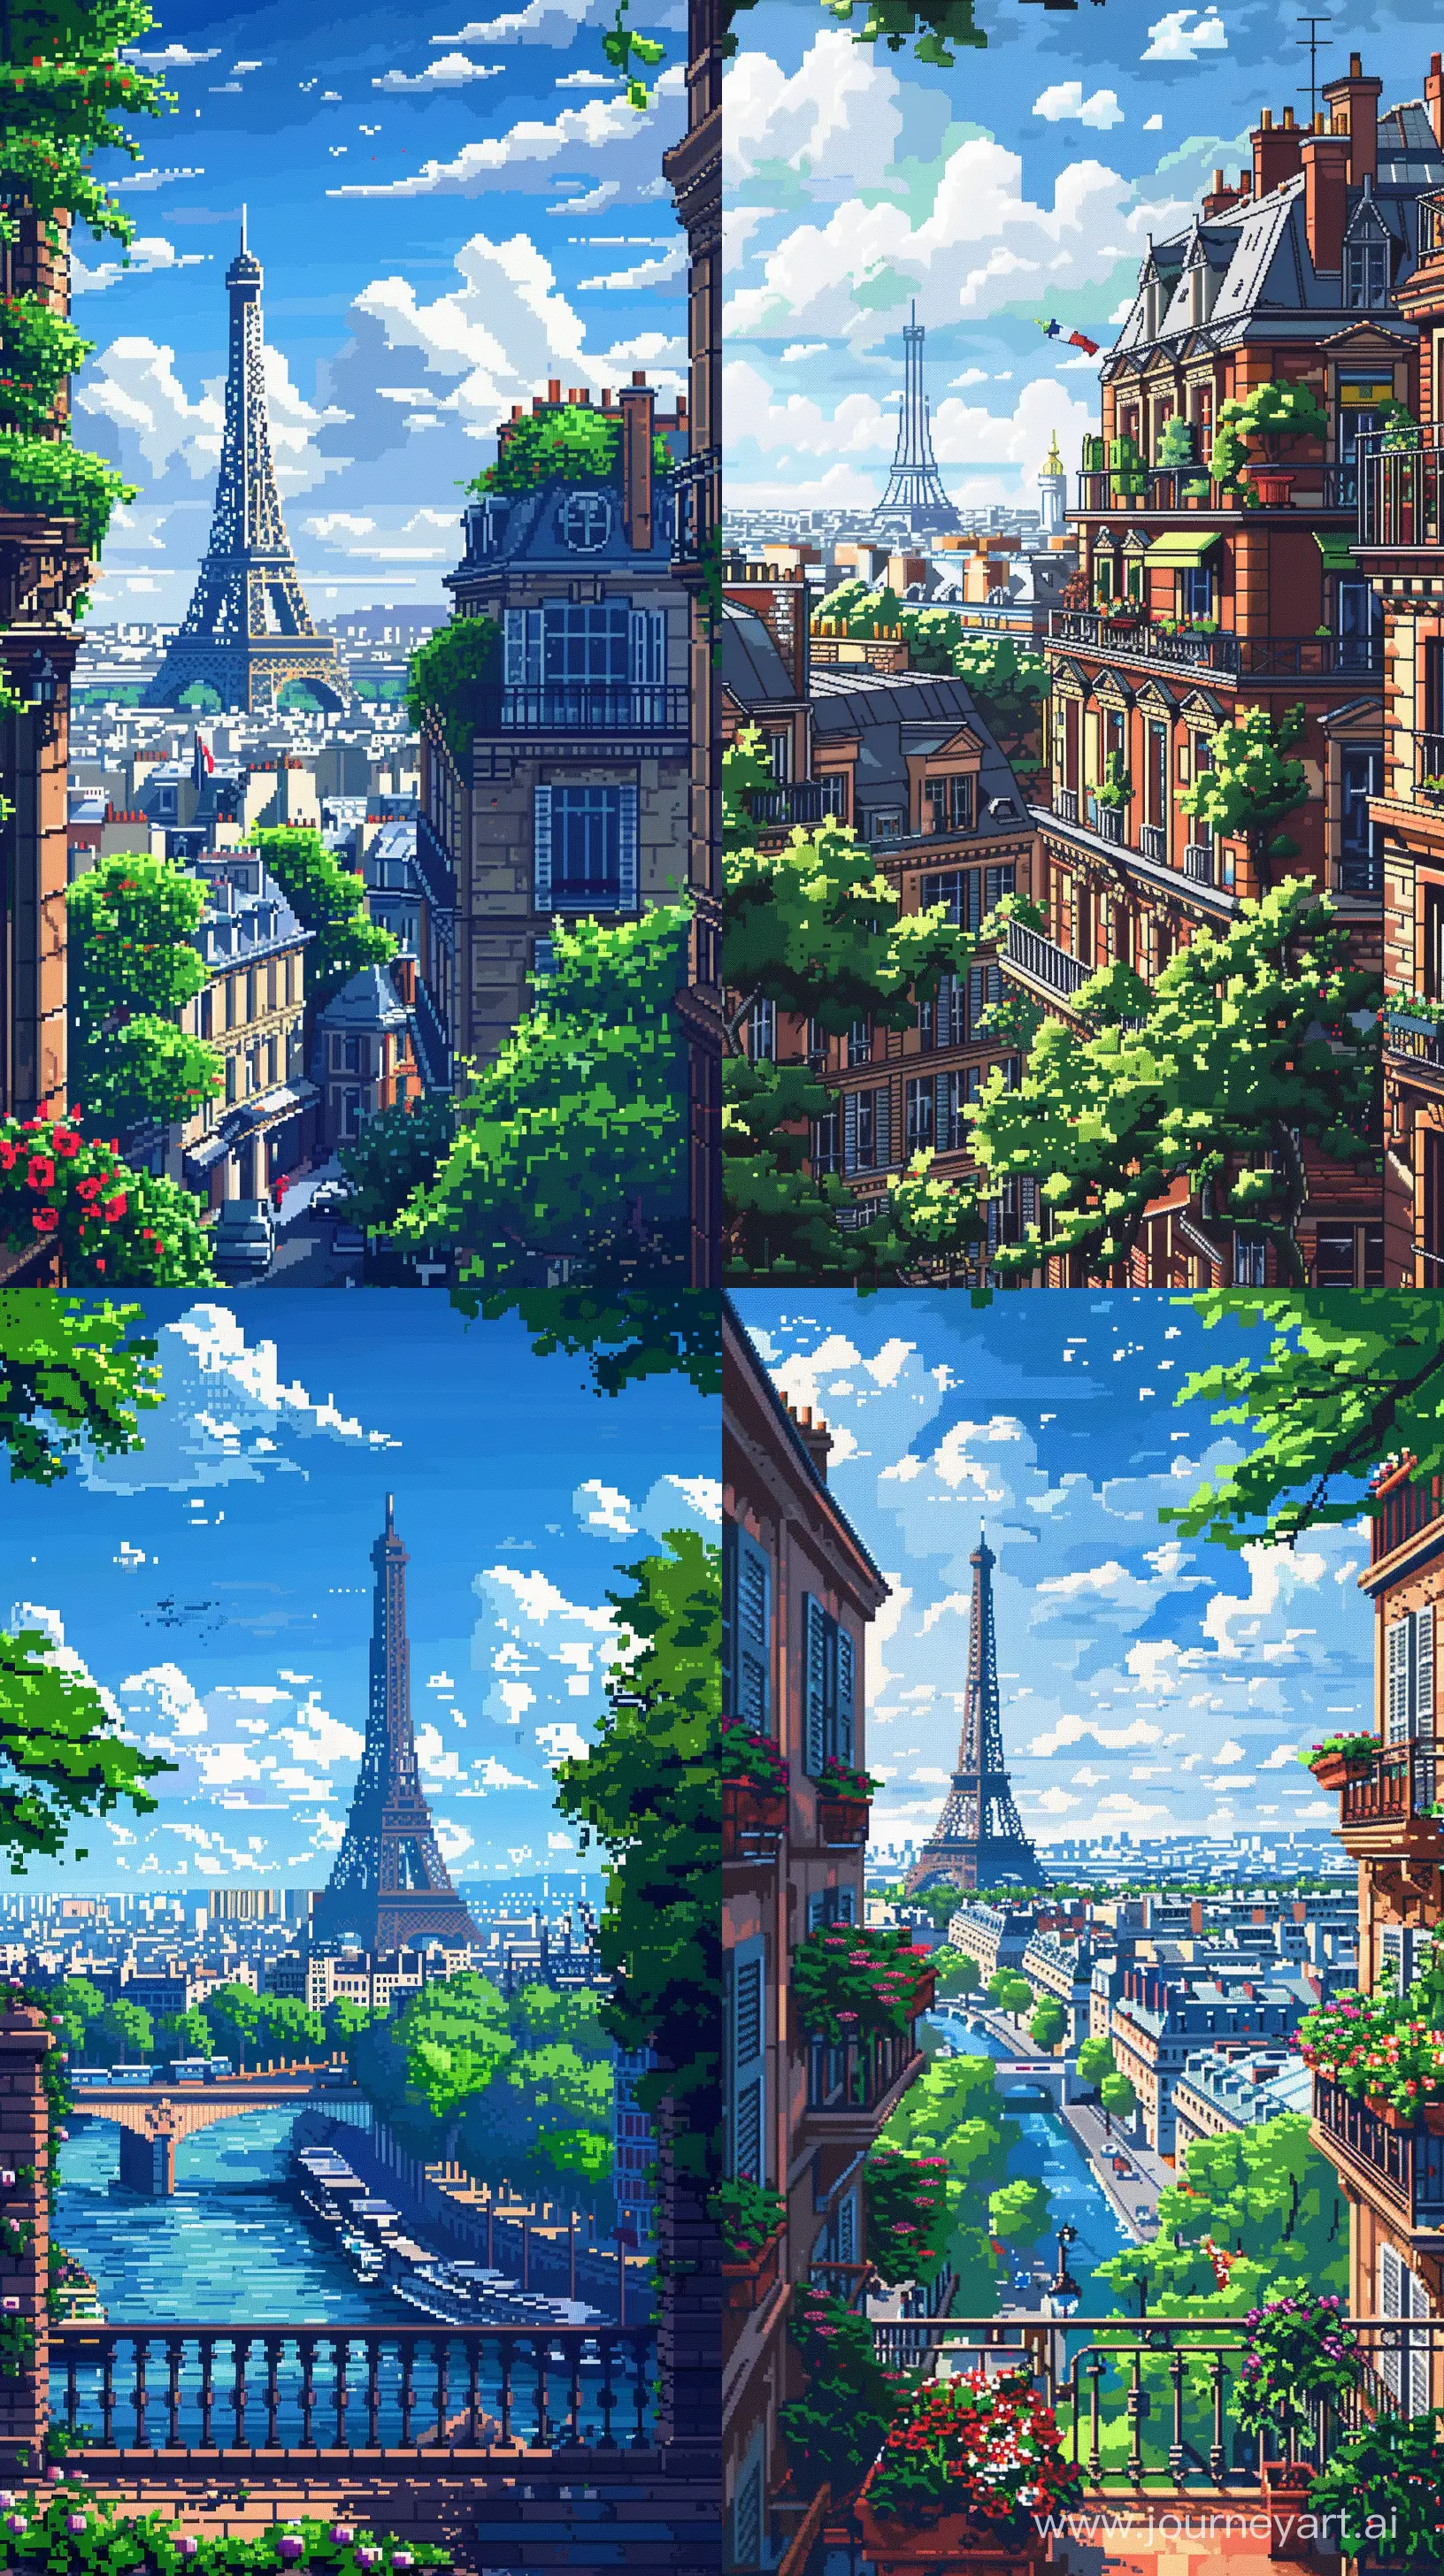 Paris City View Illustration in 8-bit Pixel Art Style, Day Time, Retro Color Details, Extremely Details --s 400 --ar 9:16